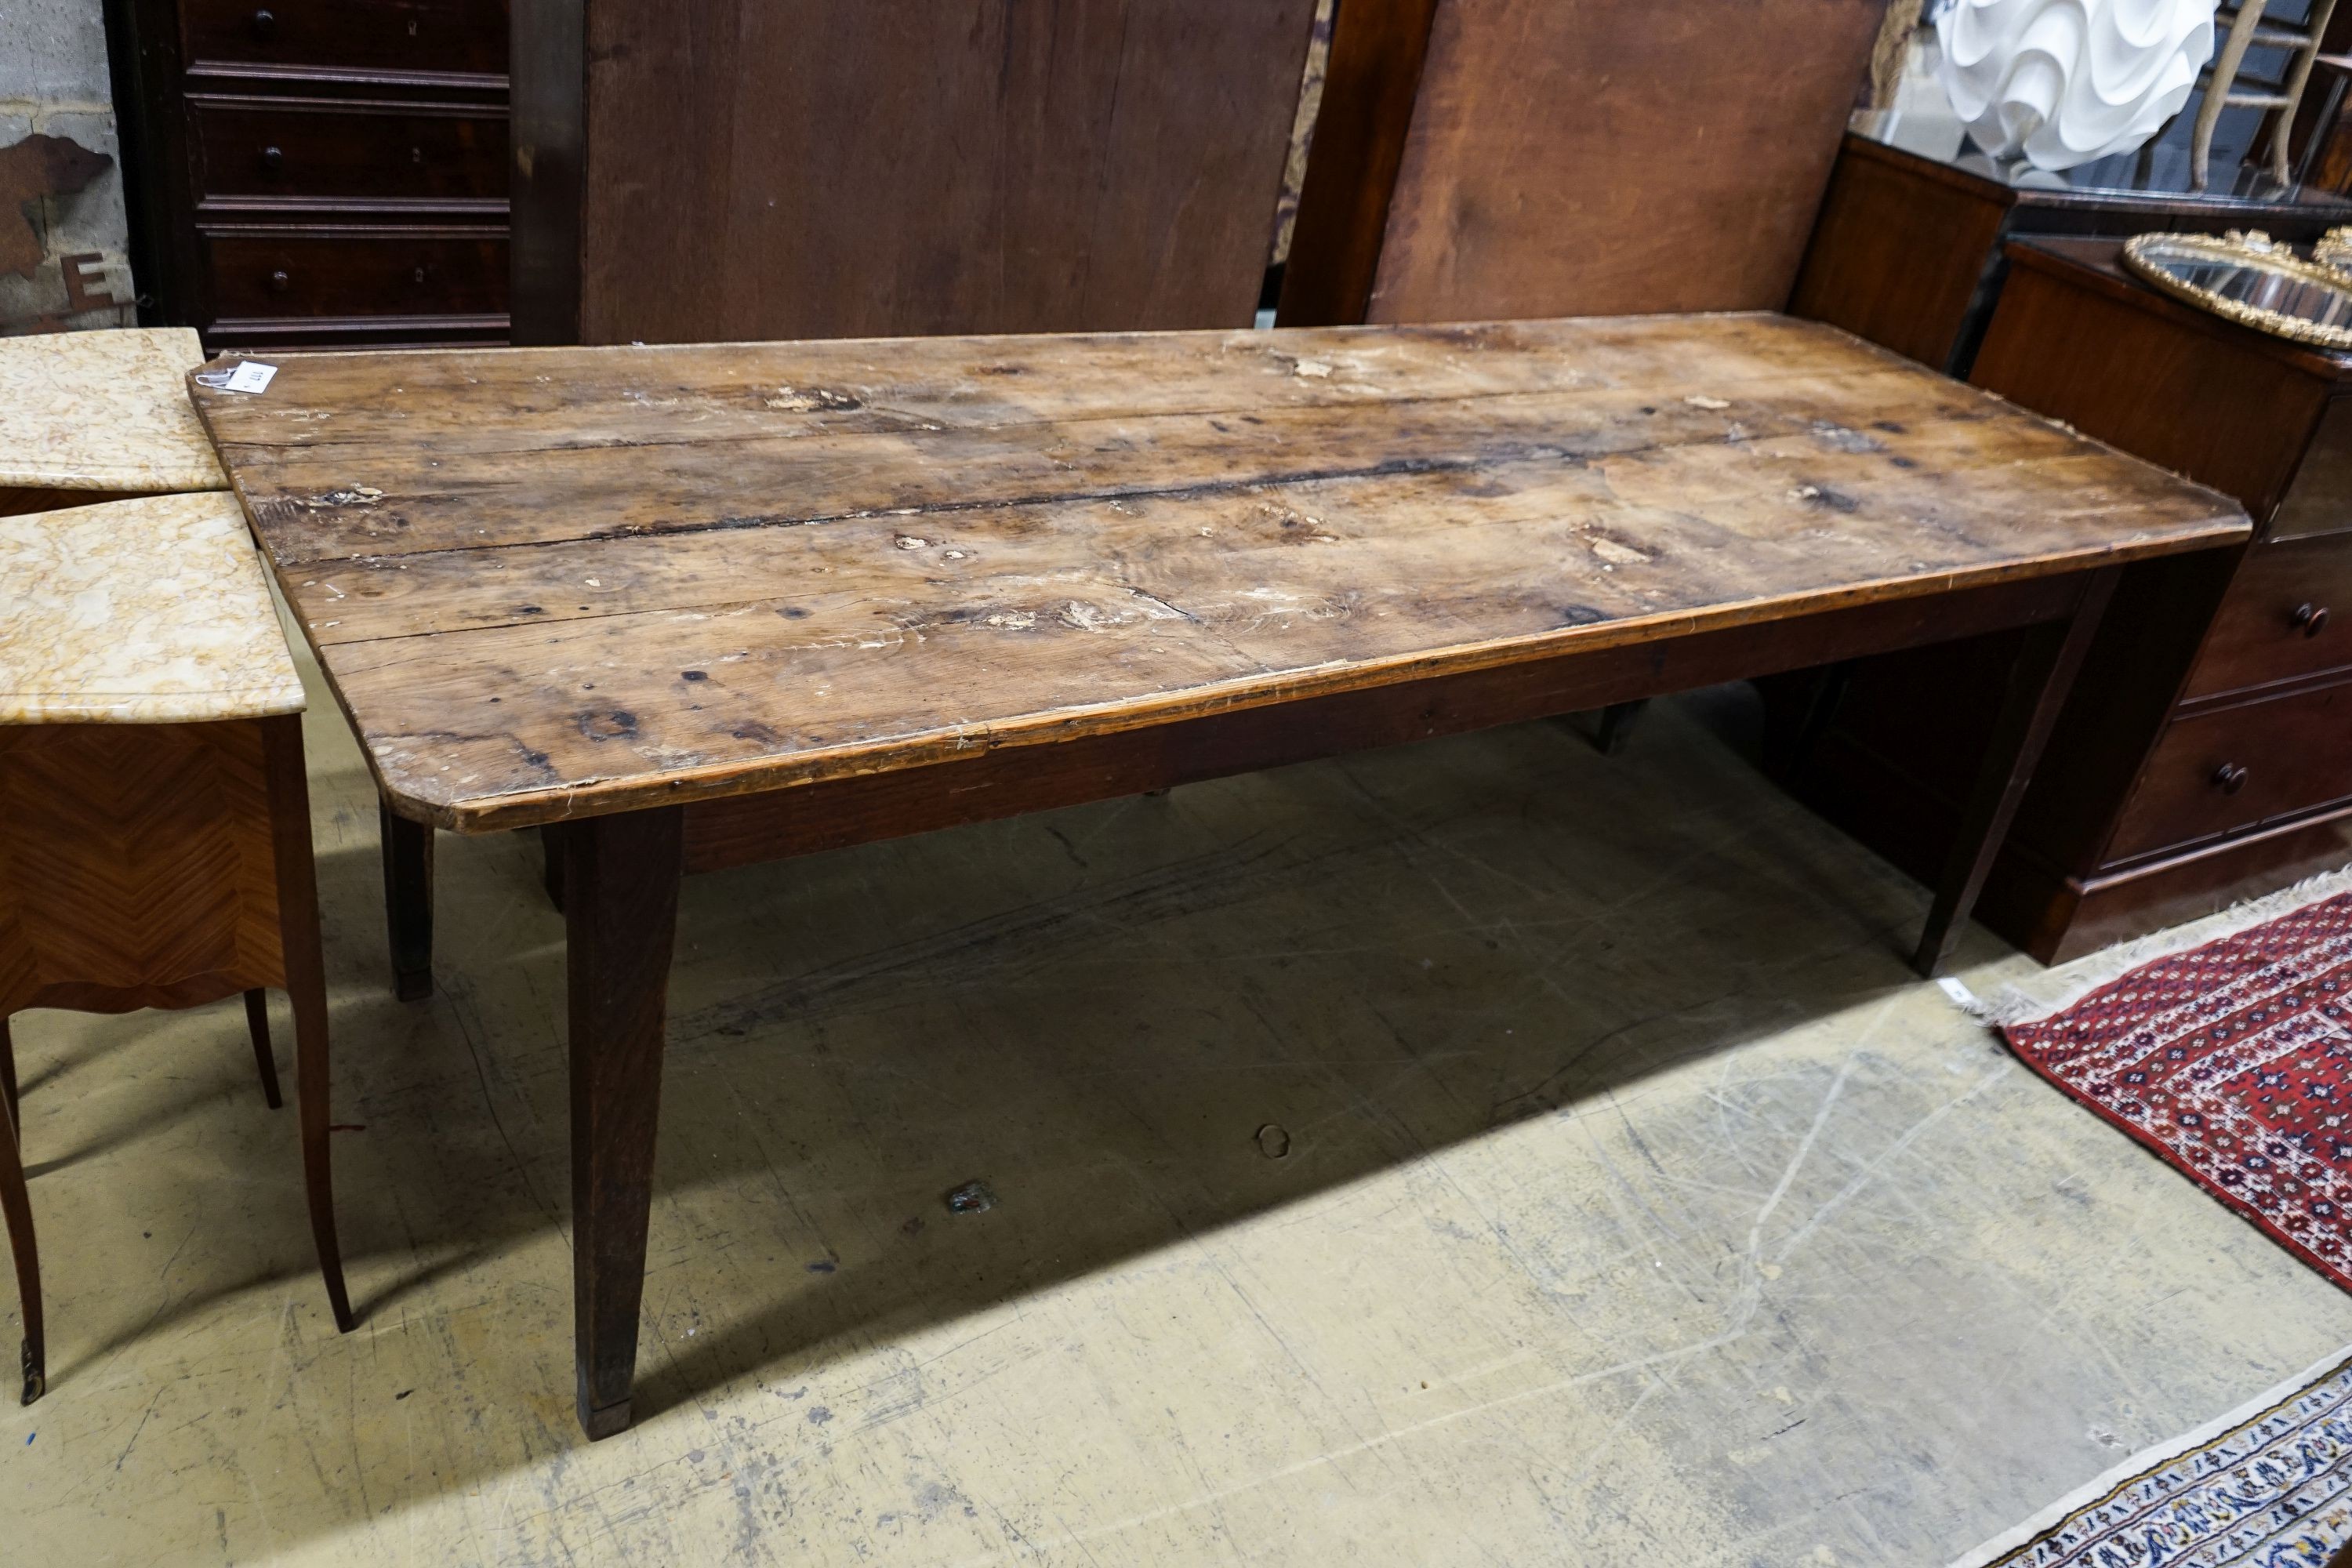 An early 19th century French provincial oak farmhouse table, length 243cm, depth 87cm, height 78cm